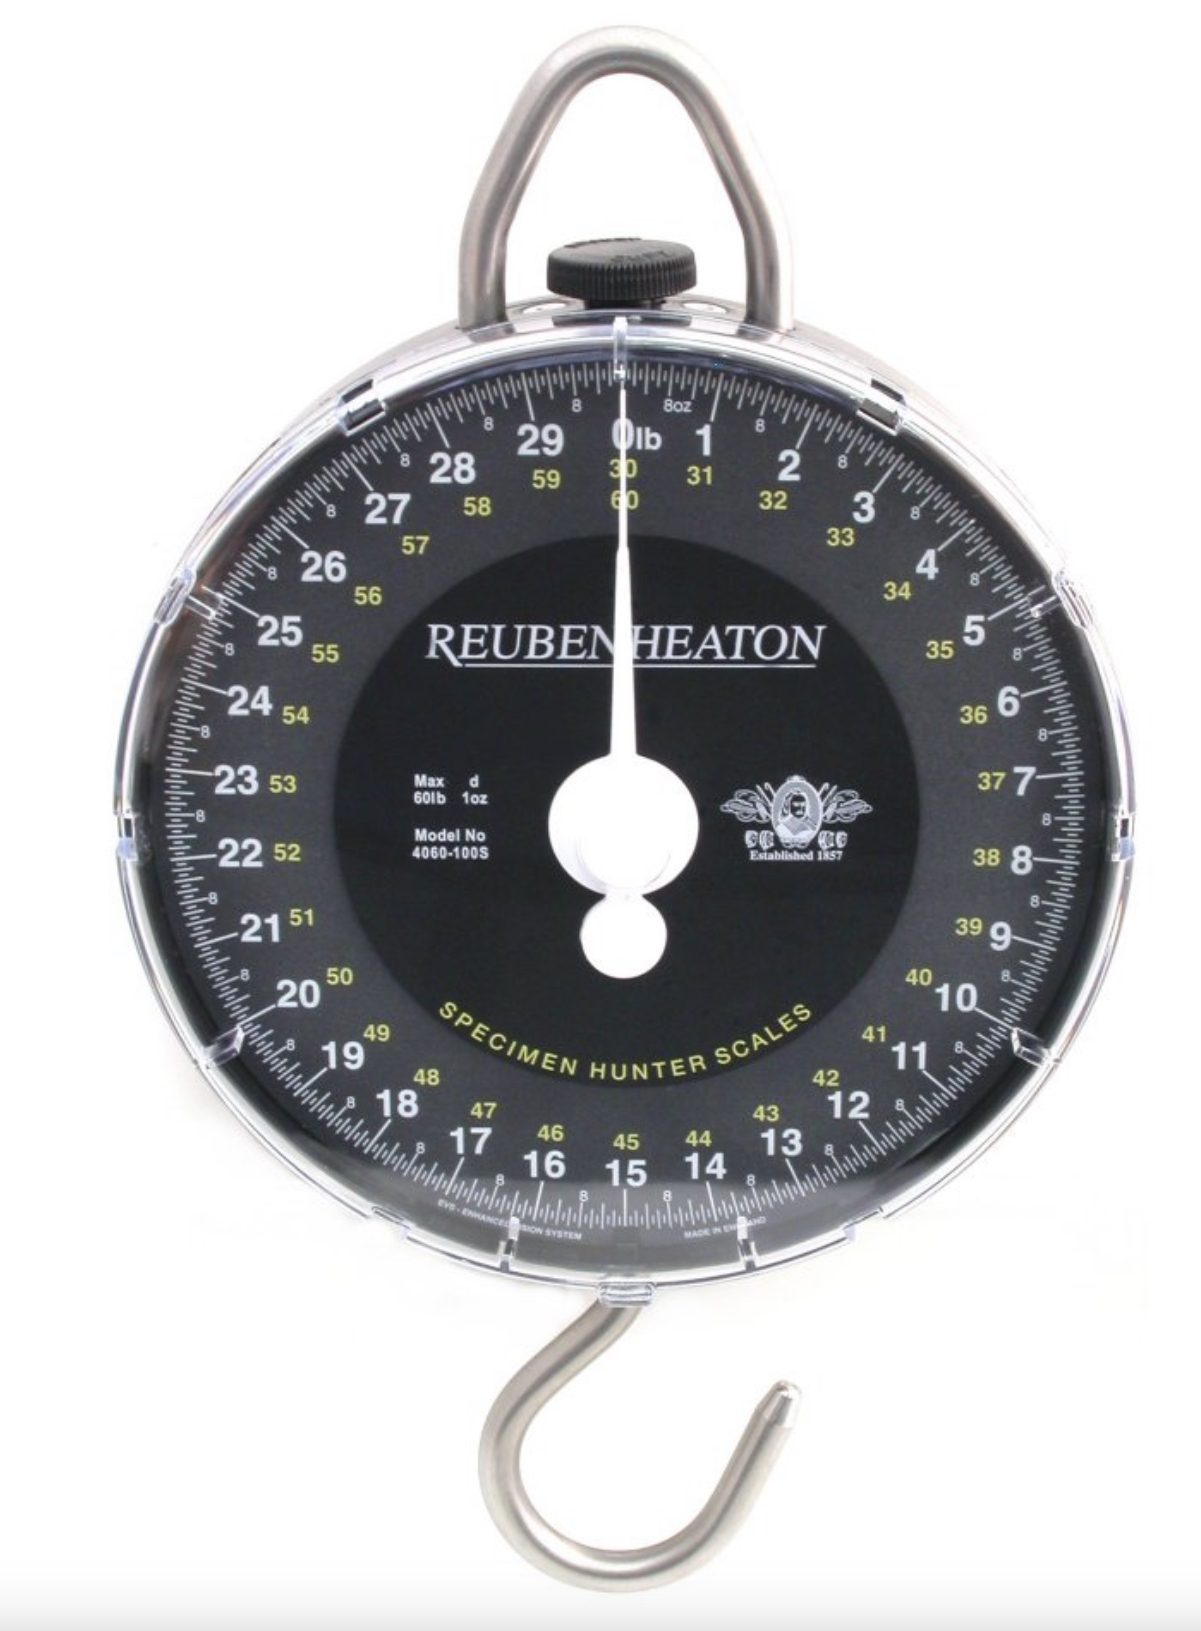 Reuben Heaton Specimen Hunter Scales